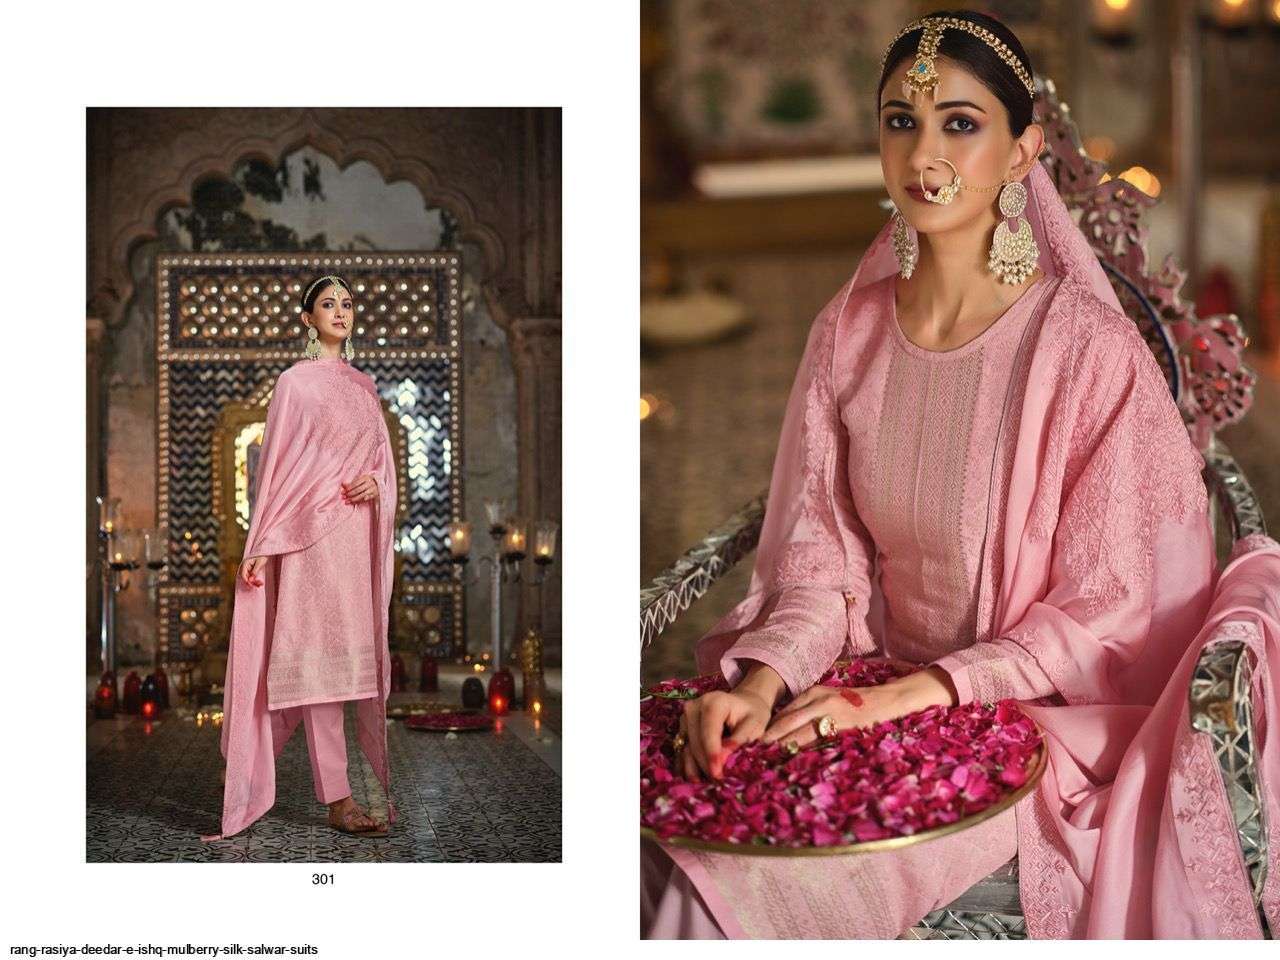 rang rasiya deedar e ishq 301-308 series mulbeery silk designer exclusive suits online wholesaler surat